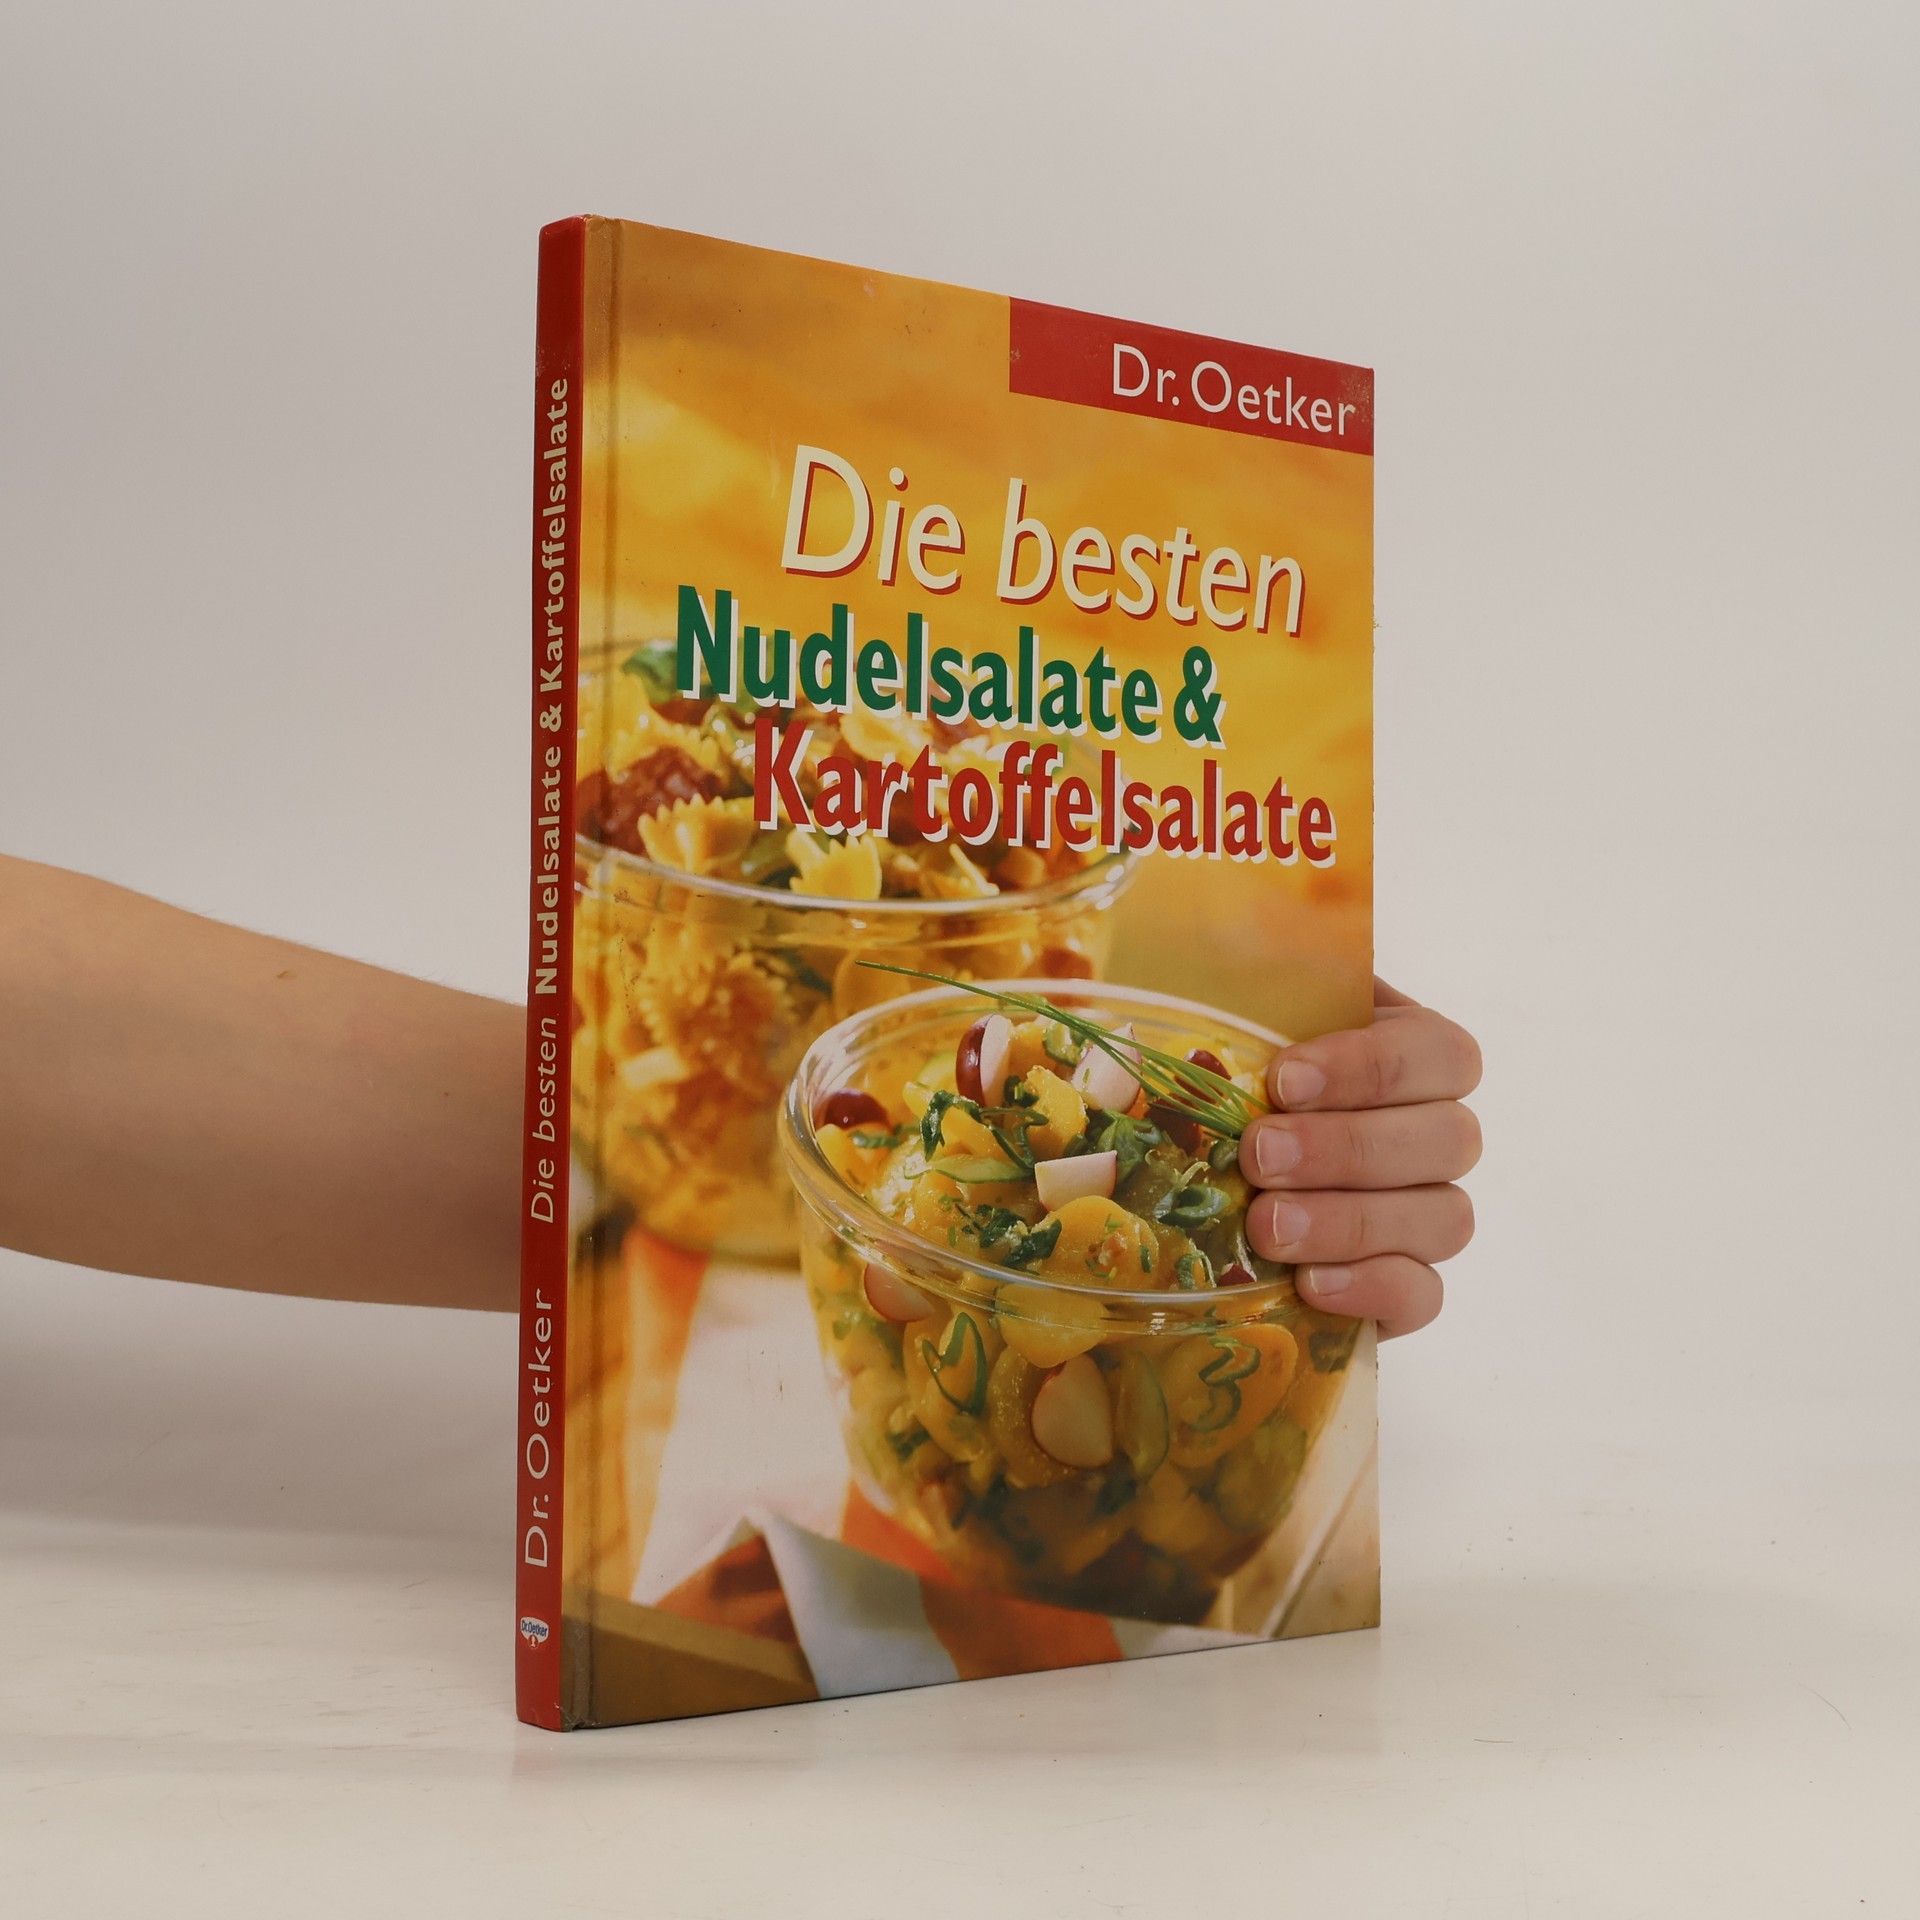 Die besten Nudelsalate & Kartoffelsalate, Dr. Oetker - Carola Reich